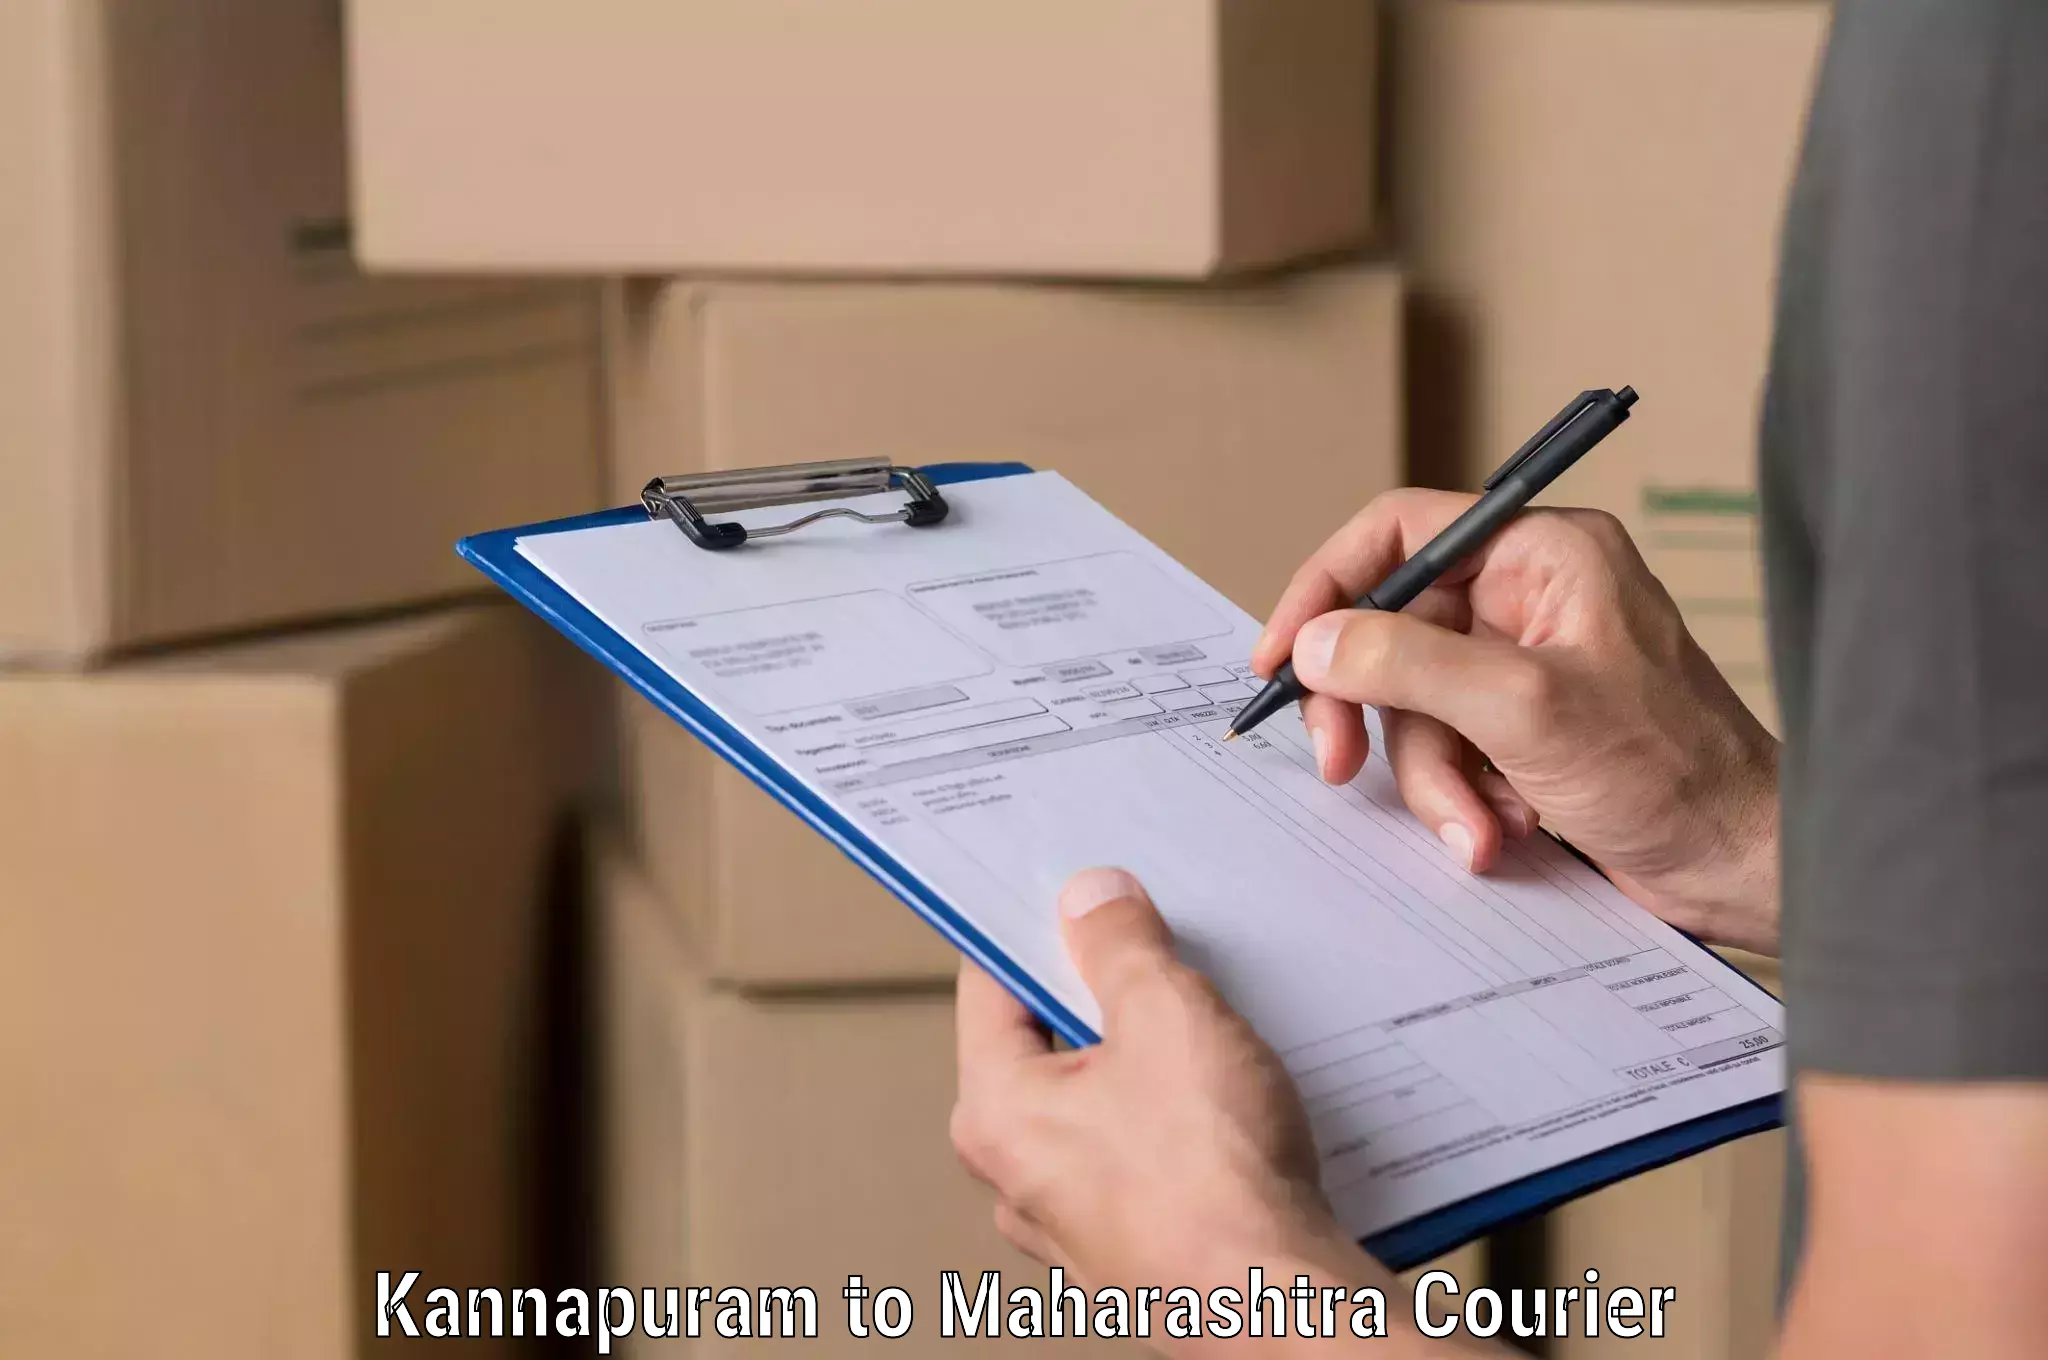 Courier app Kannapuram to Mahad